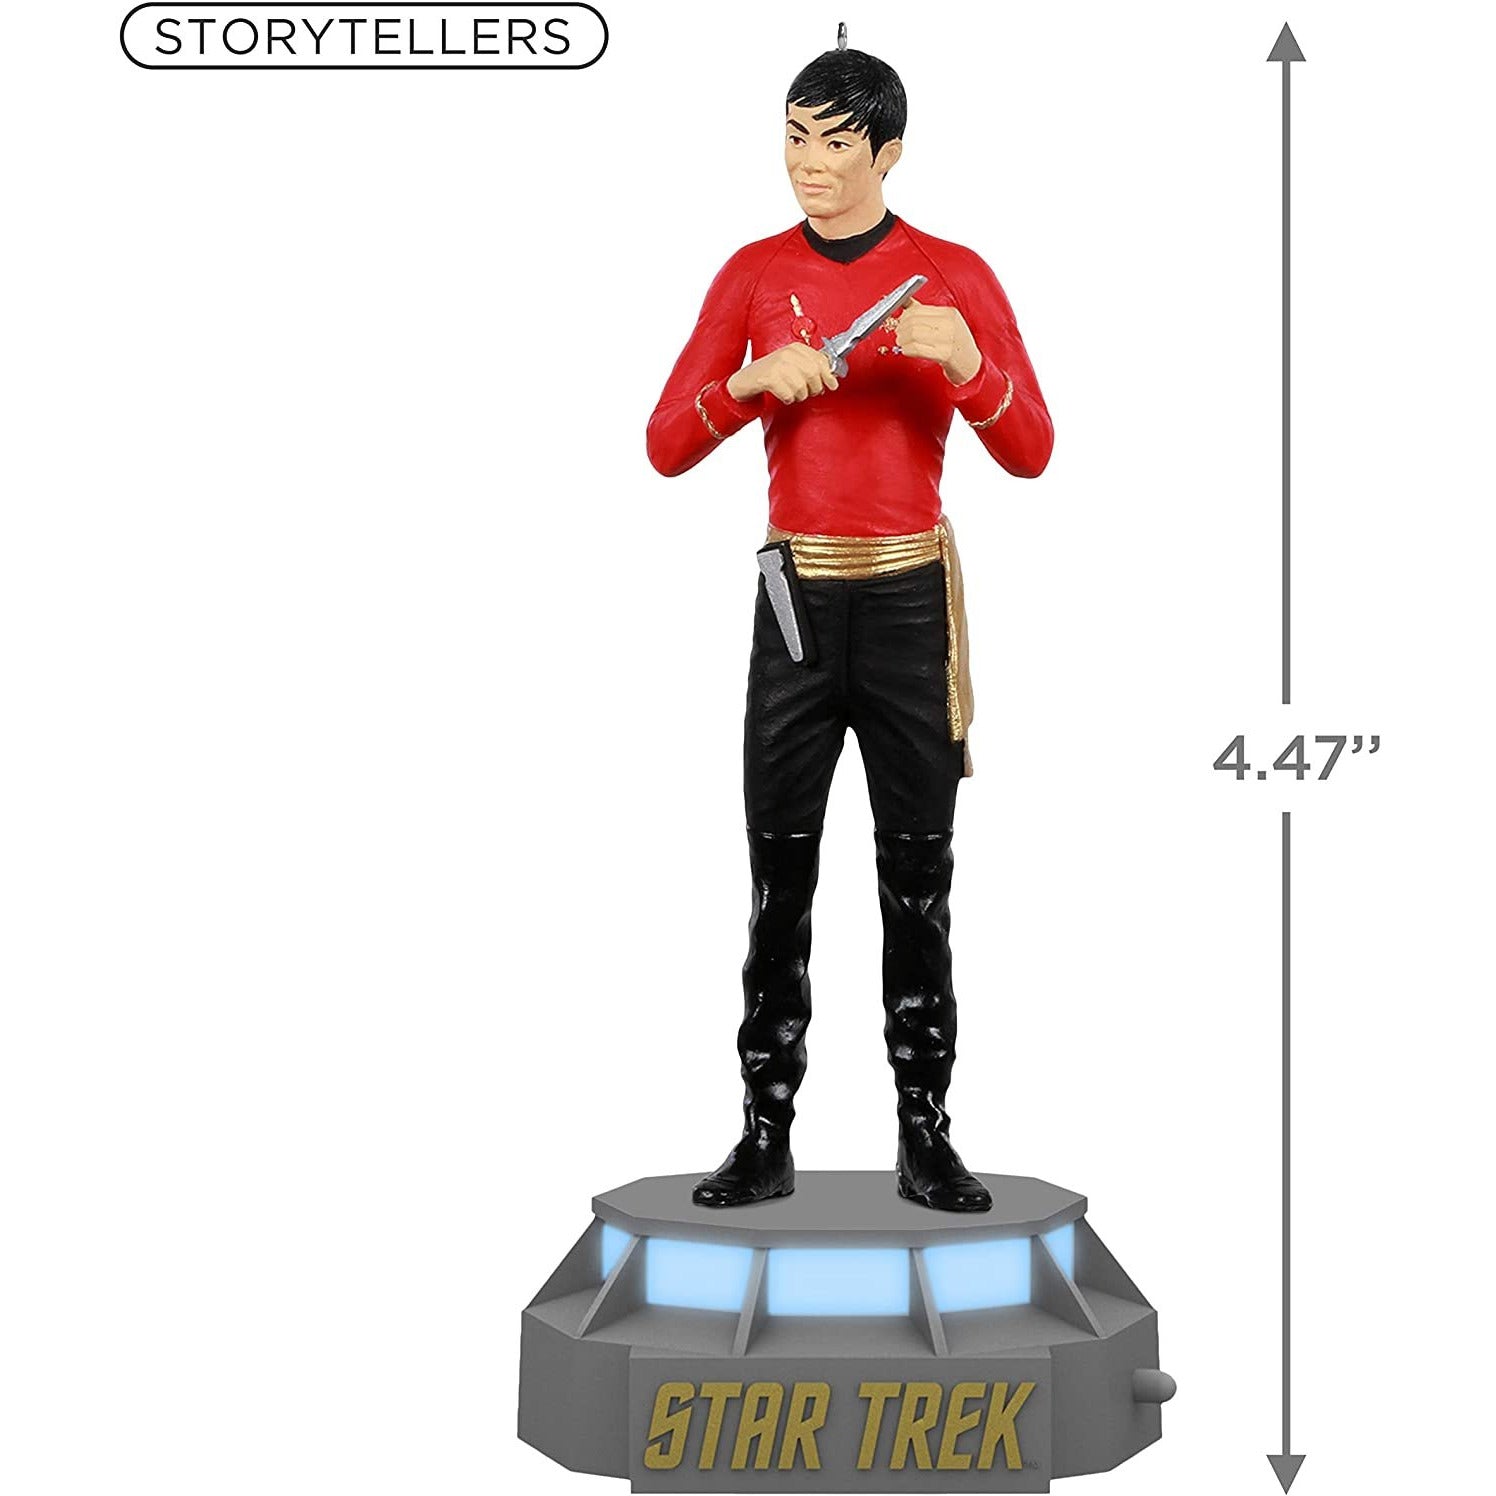 Hikaru Sulu, Star Trek Storytellers Collection Ornament, 2020 Hallmark Keepsake Light and Sound